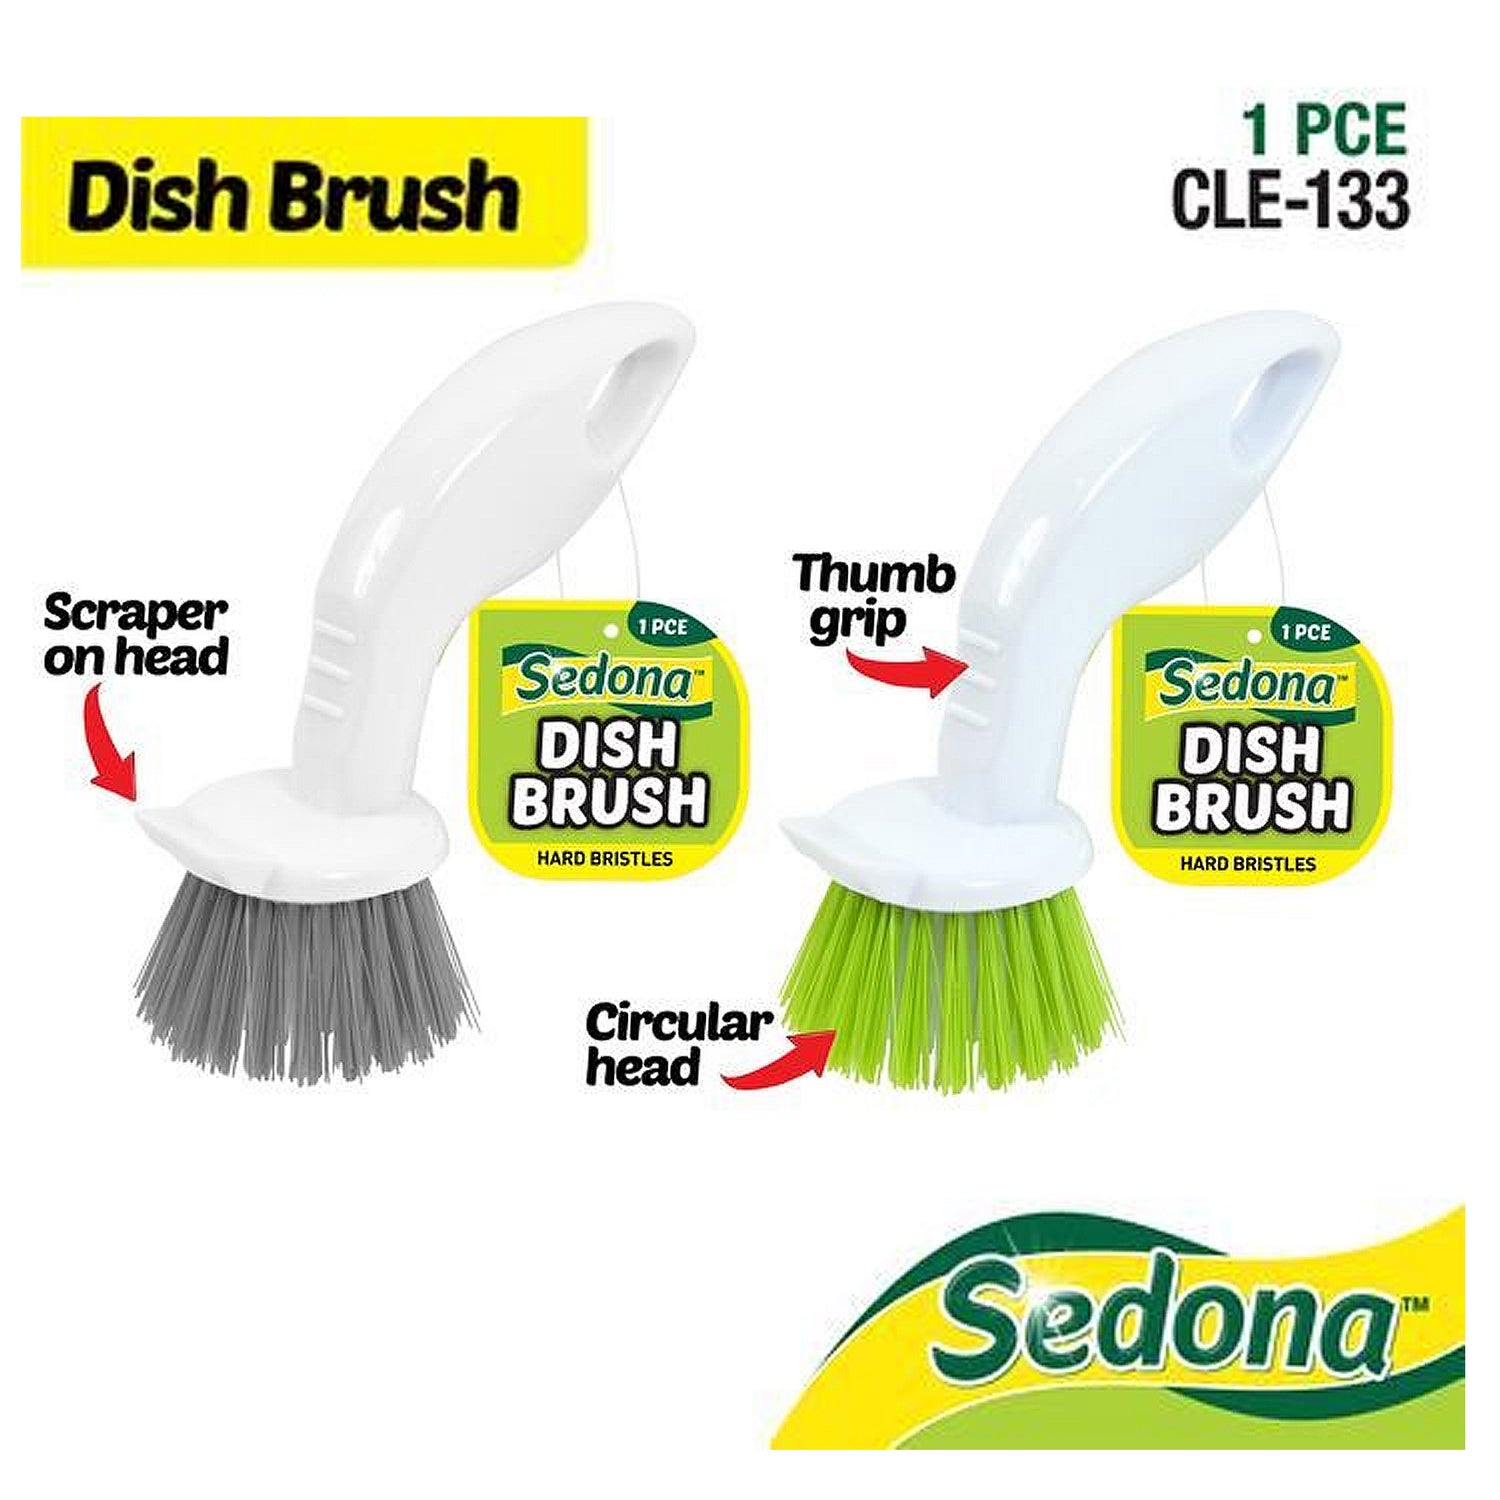 Dish Brush Oblong Circular Small Compact Scraper 2 in 1 Dual Head